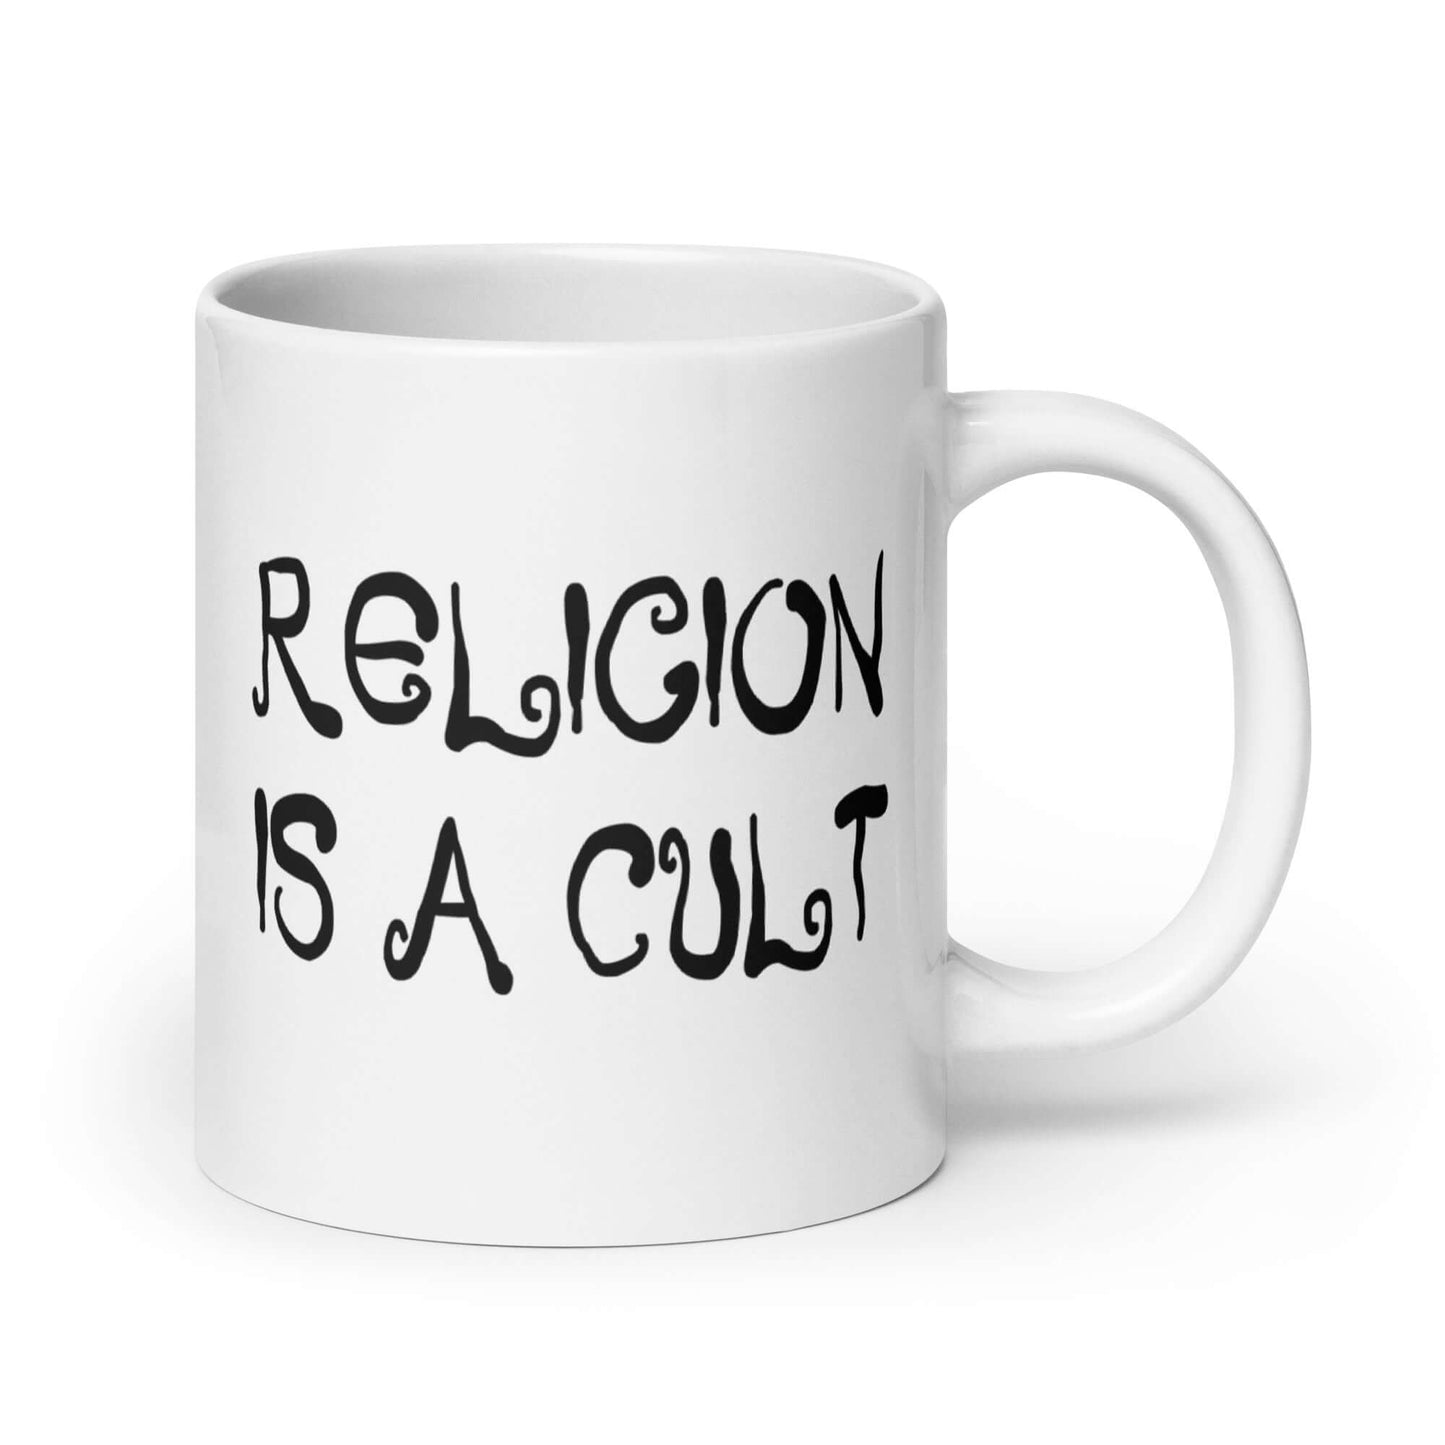 Religion is a cult ceramic coffee mug